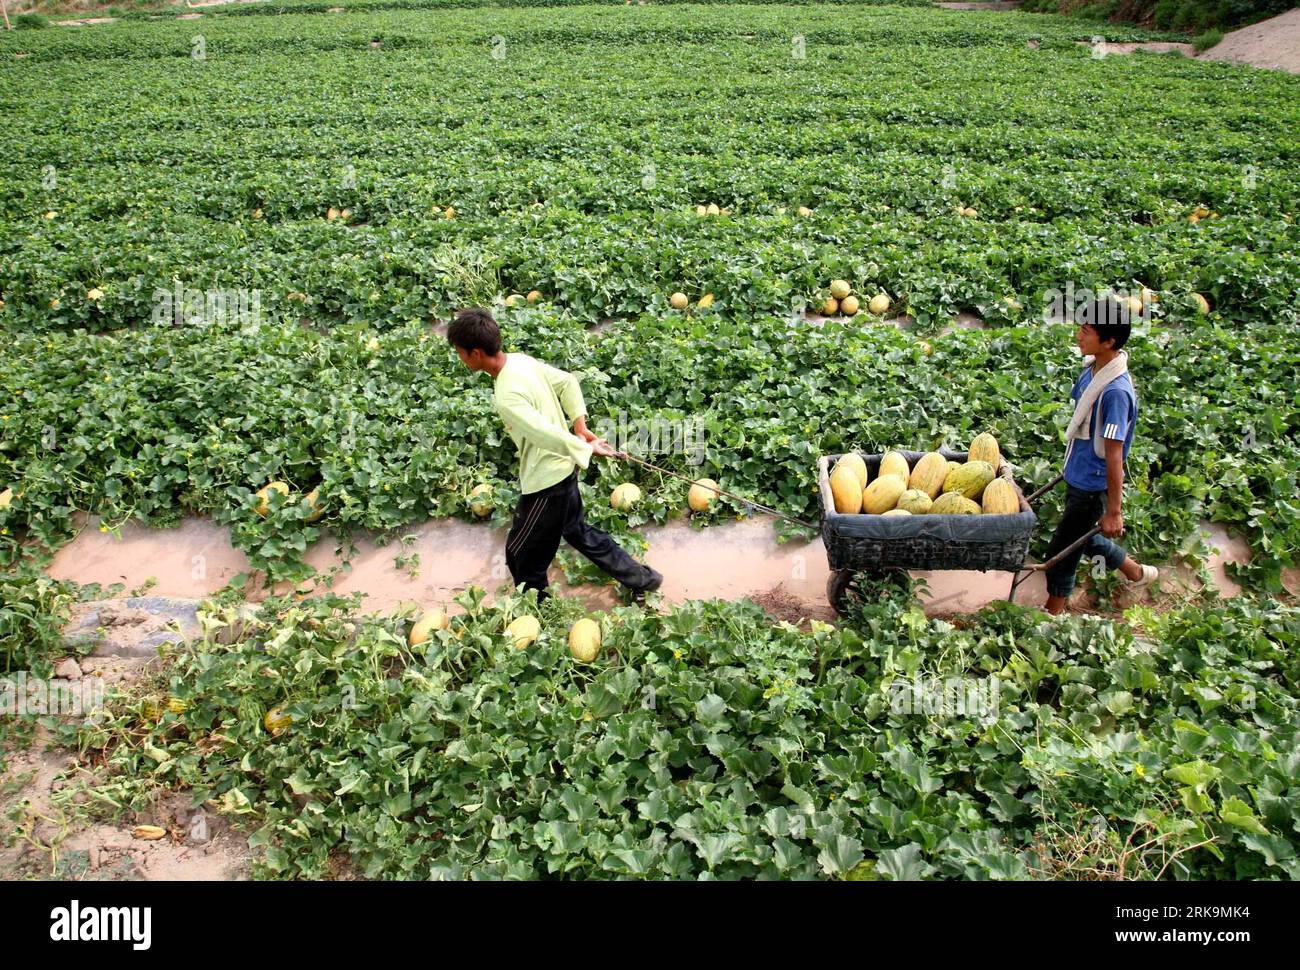 Bildnummer: 54212997  Datum: 06.07.2010  Copyright: imago/Xinhua (100707) -- HAMI, July 7, 2010 (Xinhua) -- Farmers harvest Hami melons, a popular cantaloupe in Xinjiang,at Nanhu Township in Hami, northwest China s Xinjiang Uygur Autonomous Region, July 6, 2010. (Xinhua/Cai Zengle) (wqq) (CN) PUBLICATIONxNOTxINxCHN Gesellschaft Wirtschaft Landwirtschaft Arbeitswelten Bauern Feldarbeit Ernte Land und Leute kbdig xdp 2010 quer o0 Melone Melonen Melonenernte    Bildnummer 54212997 Date 06 07 2010 Copyright Imago XINHUA  Hami July 7 2010 XINHUA Farmers Harvest Hami melons a Popular Cantaloupe in X Stock Photo